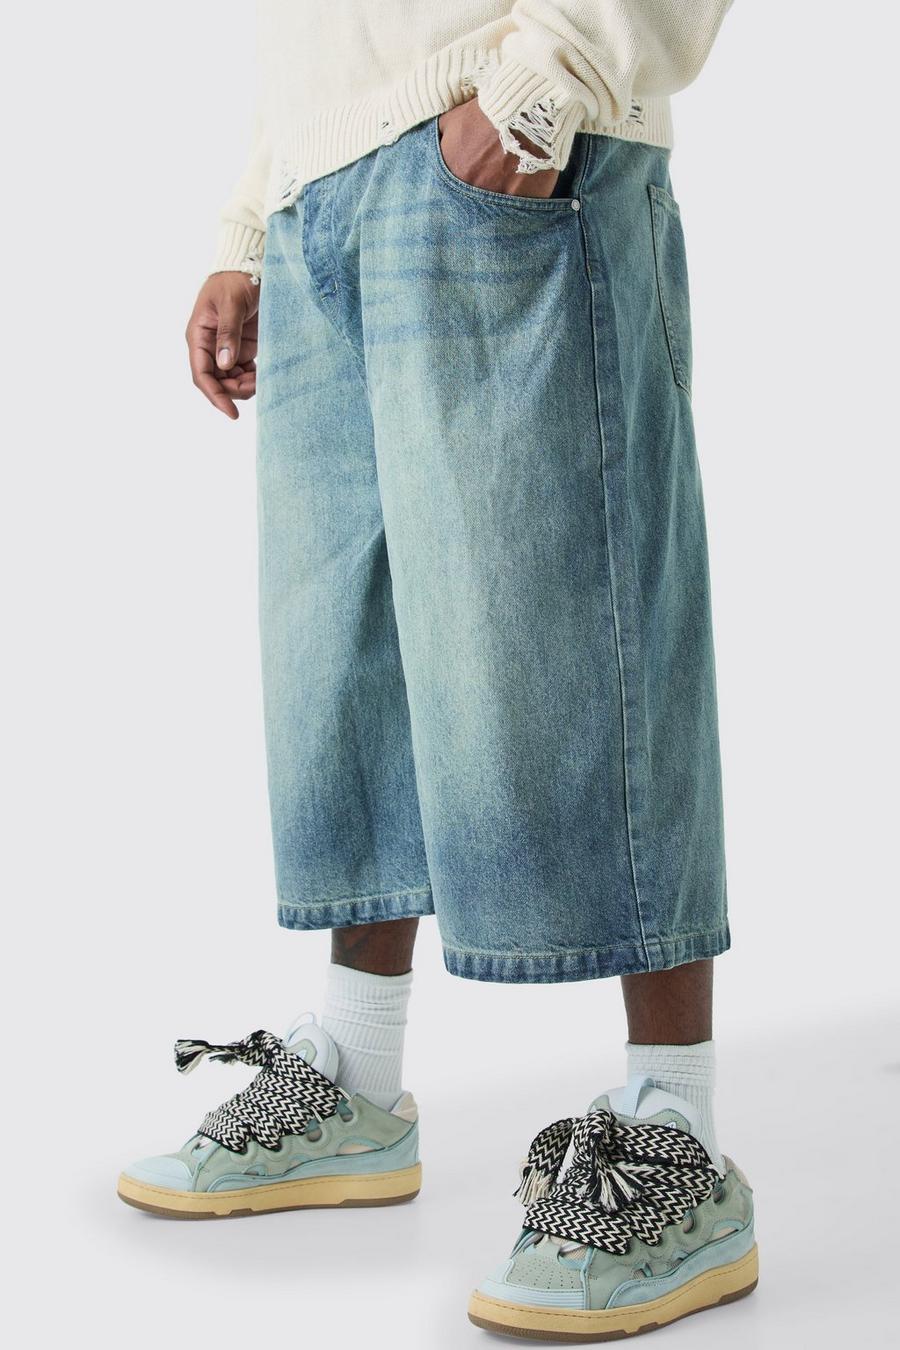 Pantaloni tuta Plus Size lunghi in denim in lavaggio blu antico, Antique blue